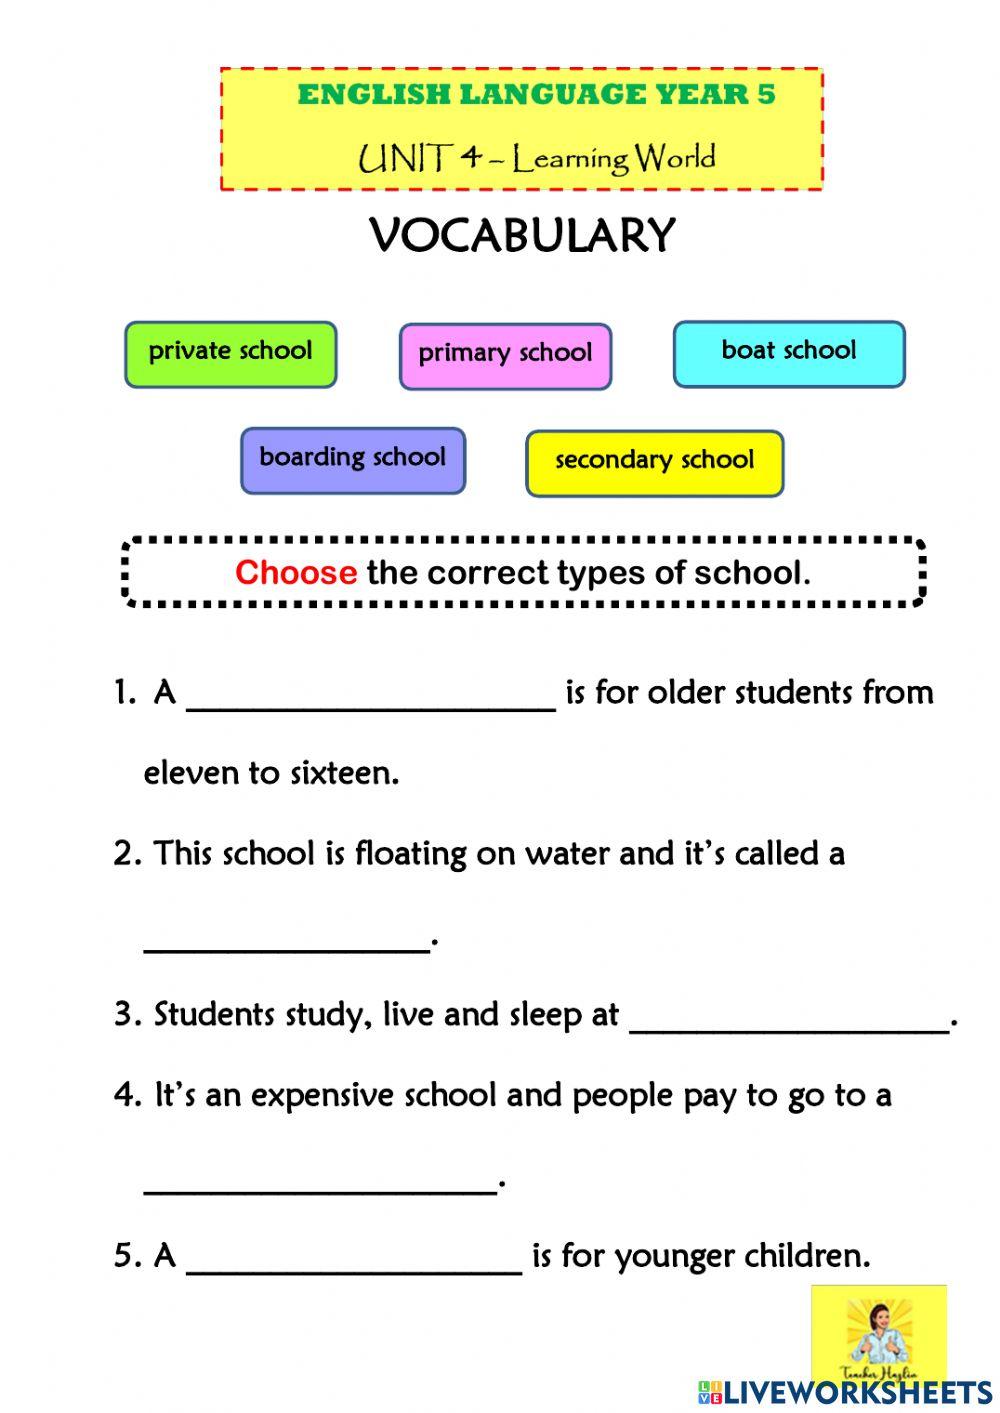 How old are you - ESL worksheet by Loryze  Chinese language learning,  Vocabulary worksheets, English language teaching